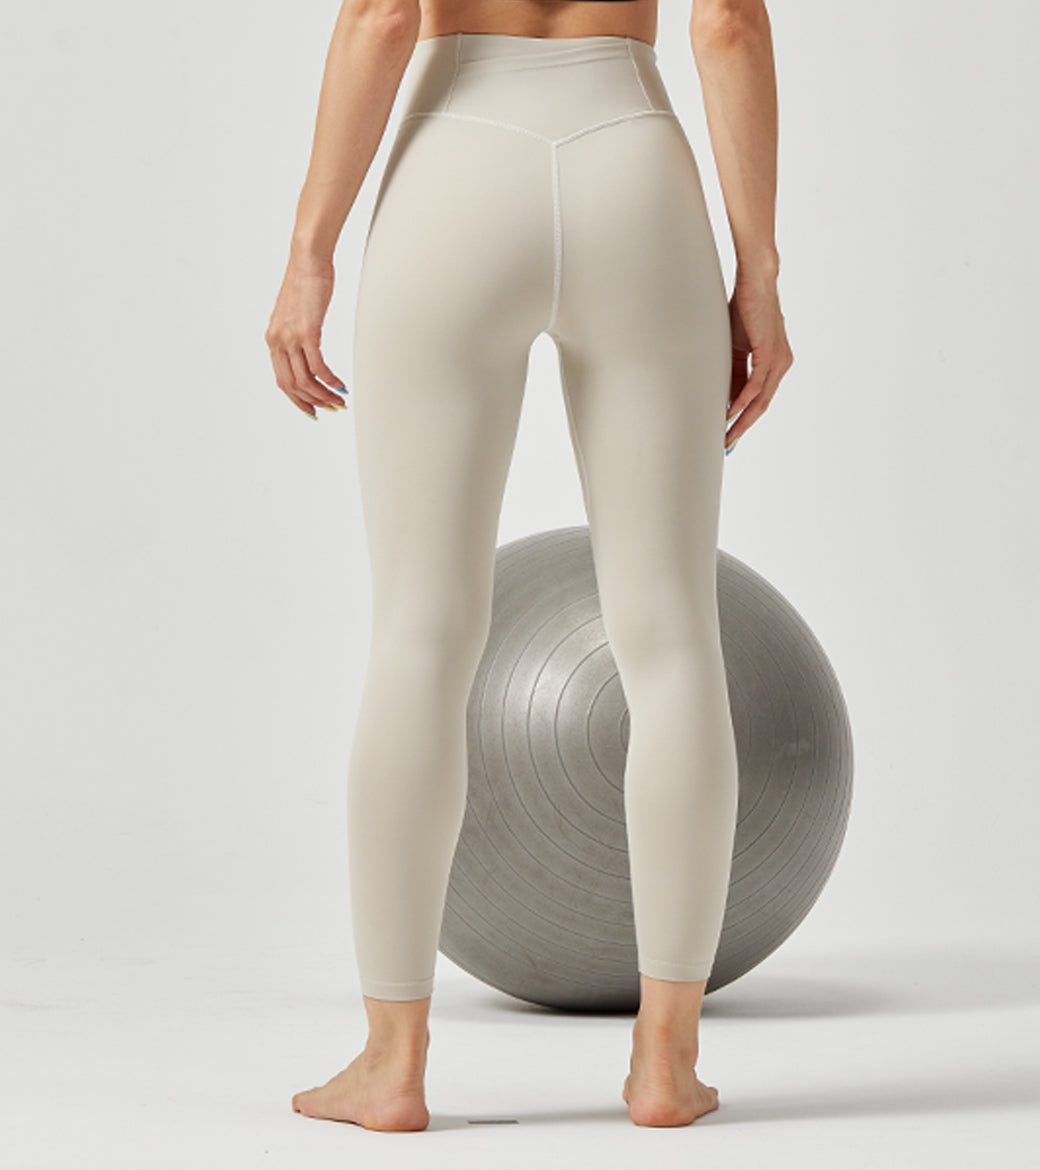 LOVESOFT Women's Light Grey Easy Warm Yarm Leggings High Waist Hips Running Yoga Pants